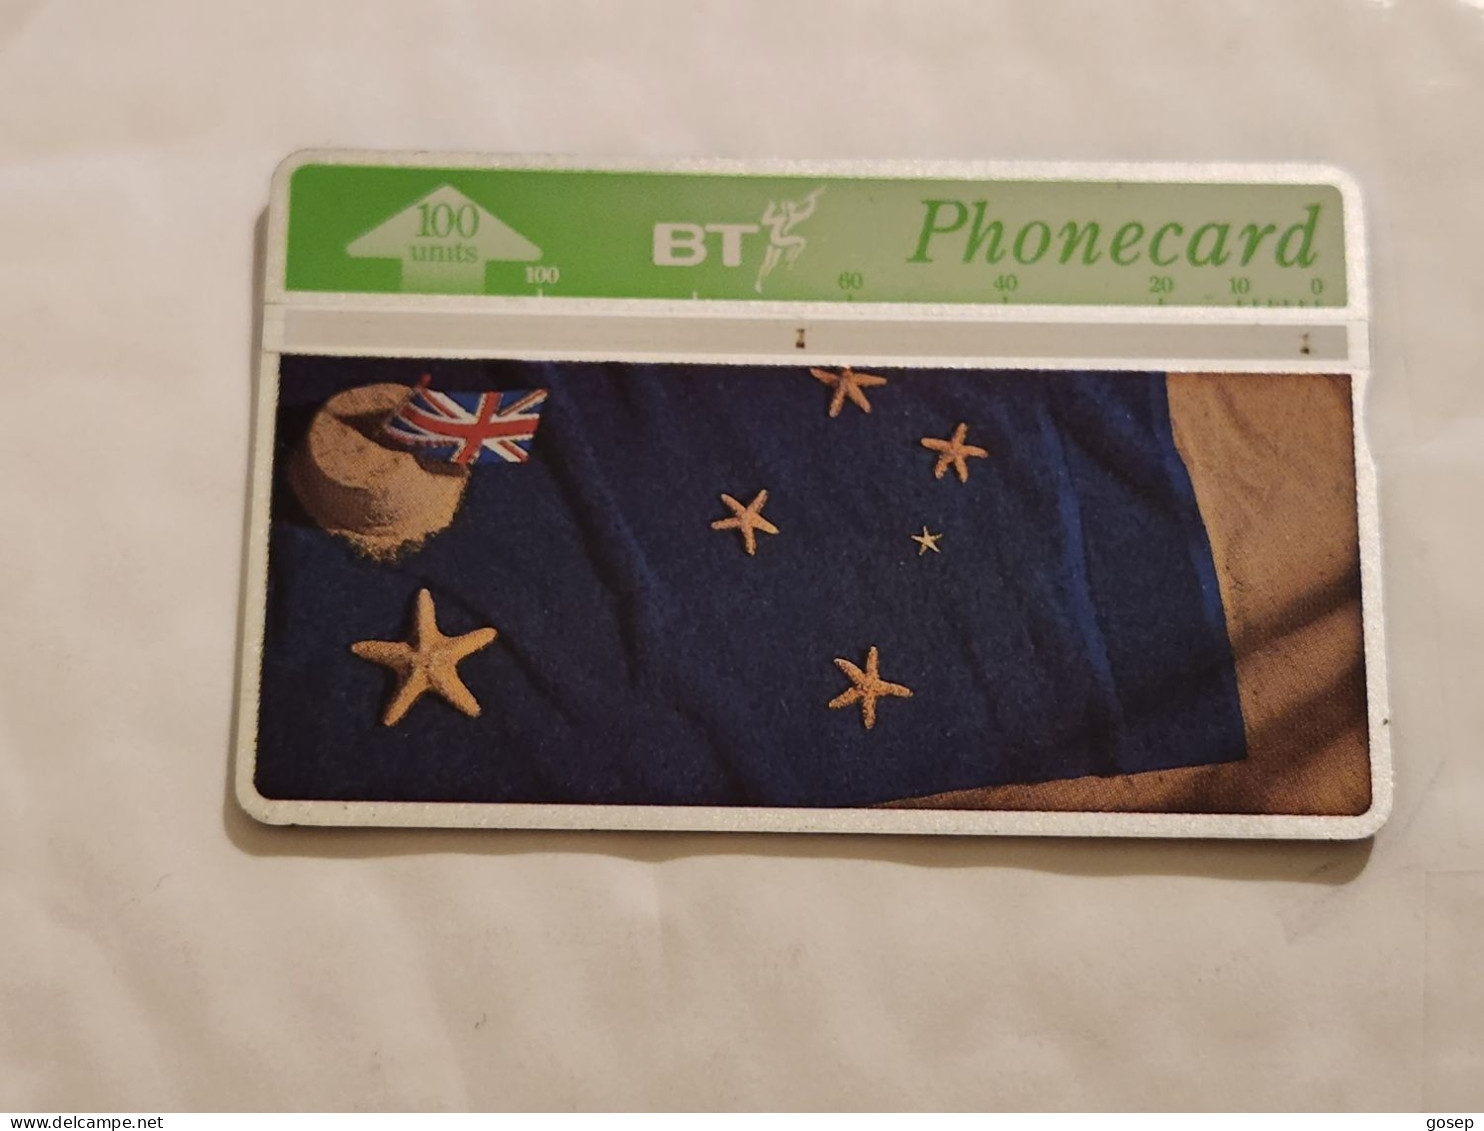 United Kingdom(BTC158)Flying The Flag 4(AUSTRALIA)(1045)(100units)(526H33634)price Cataloge6.00£+1card Prepiad Free - BT Emissions Commémoratives